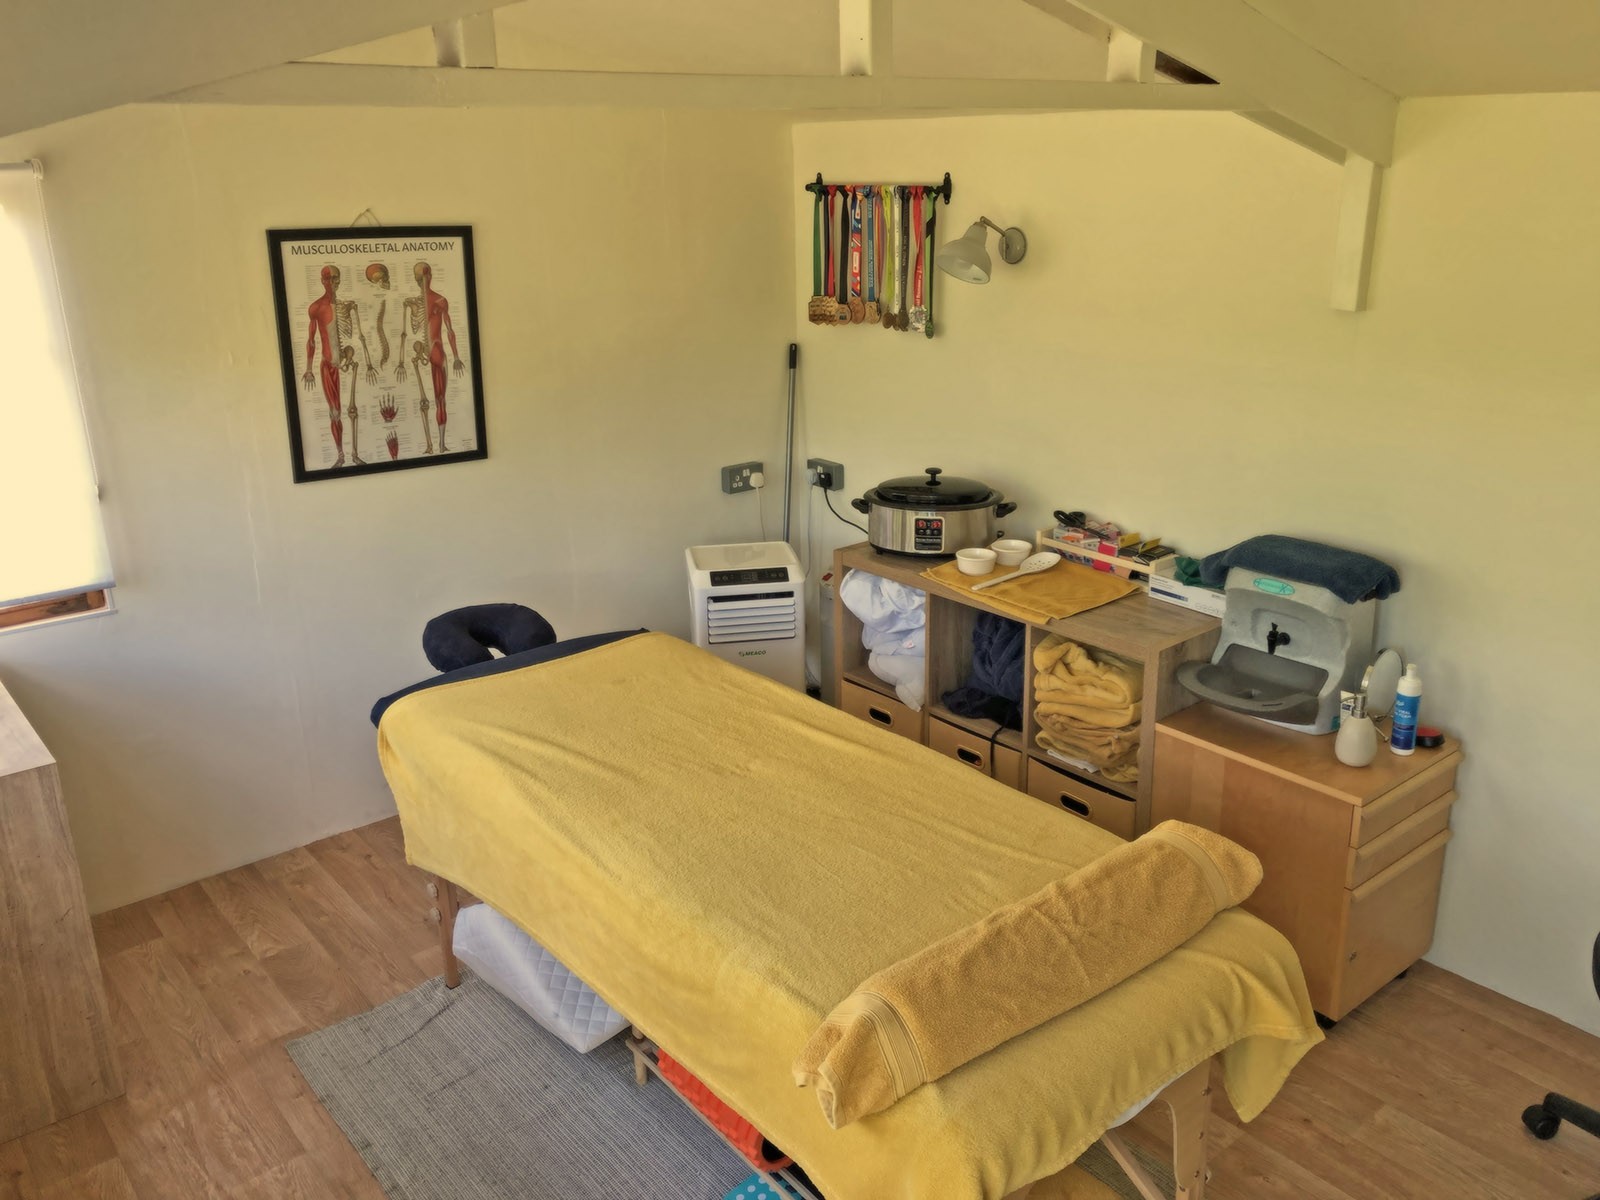 Hannah Tabram Kenninghall massage therapy room interior